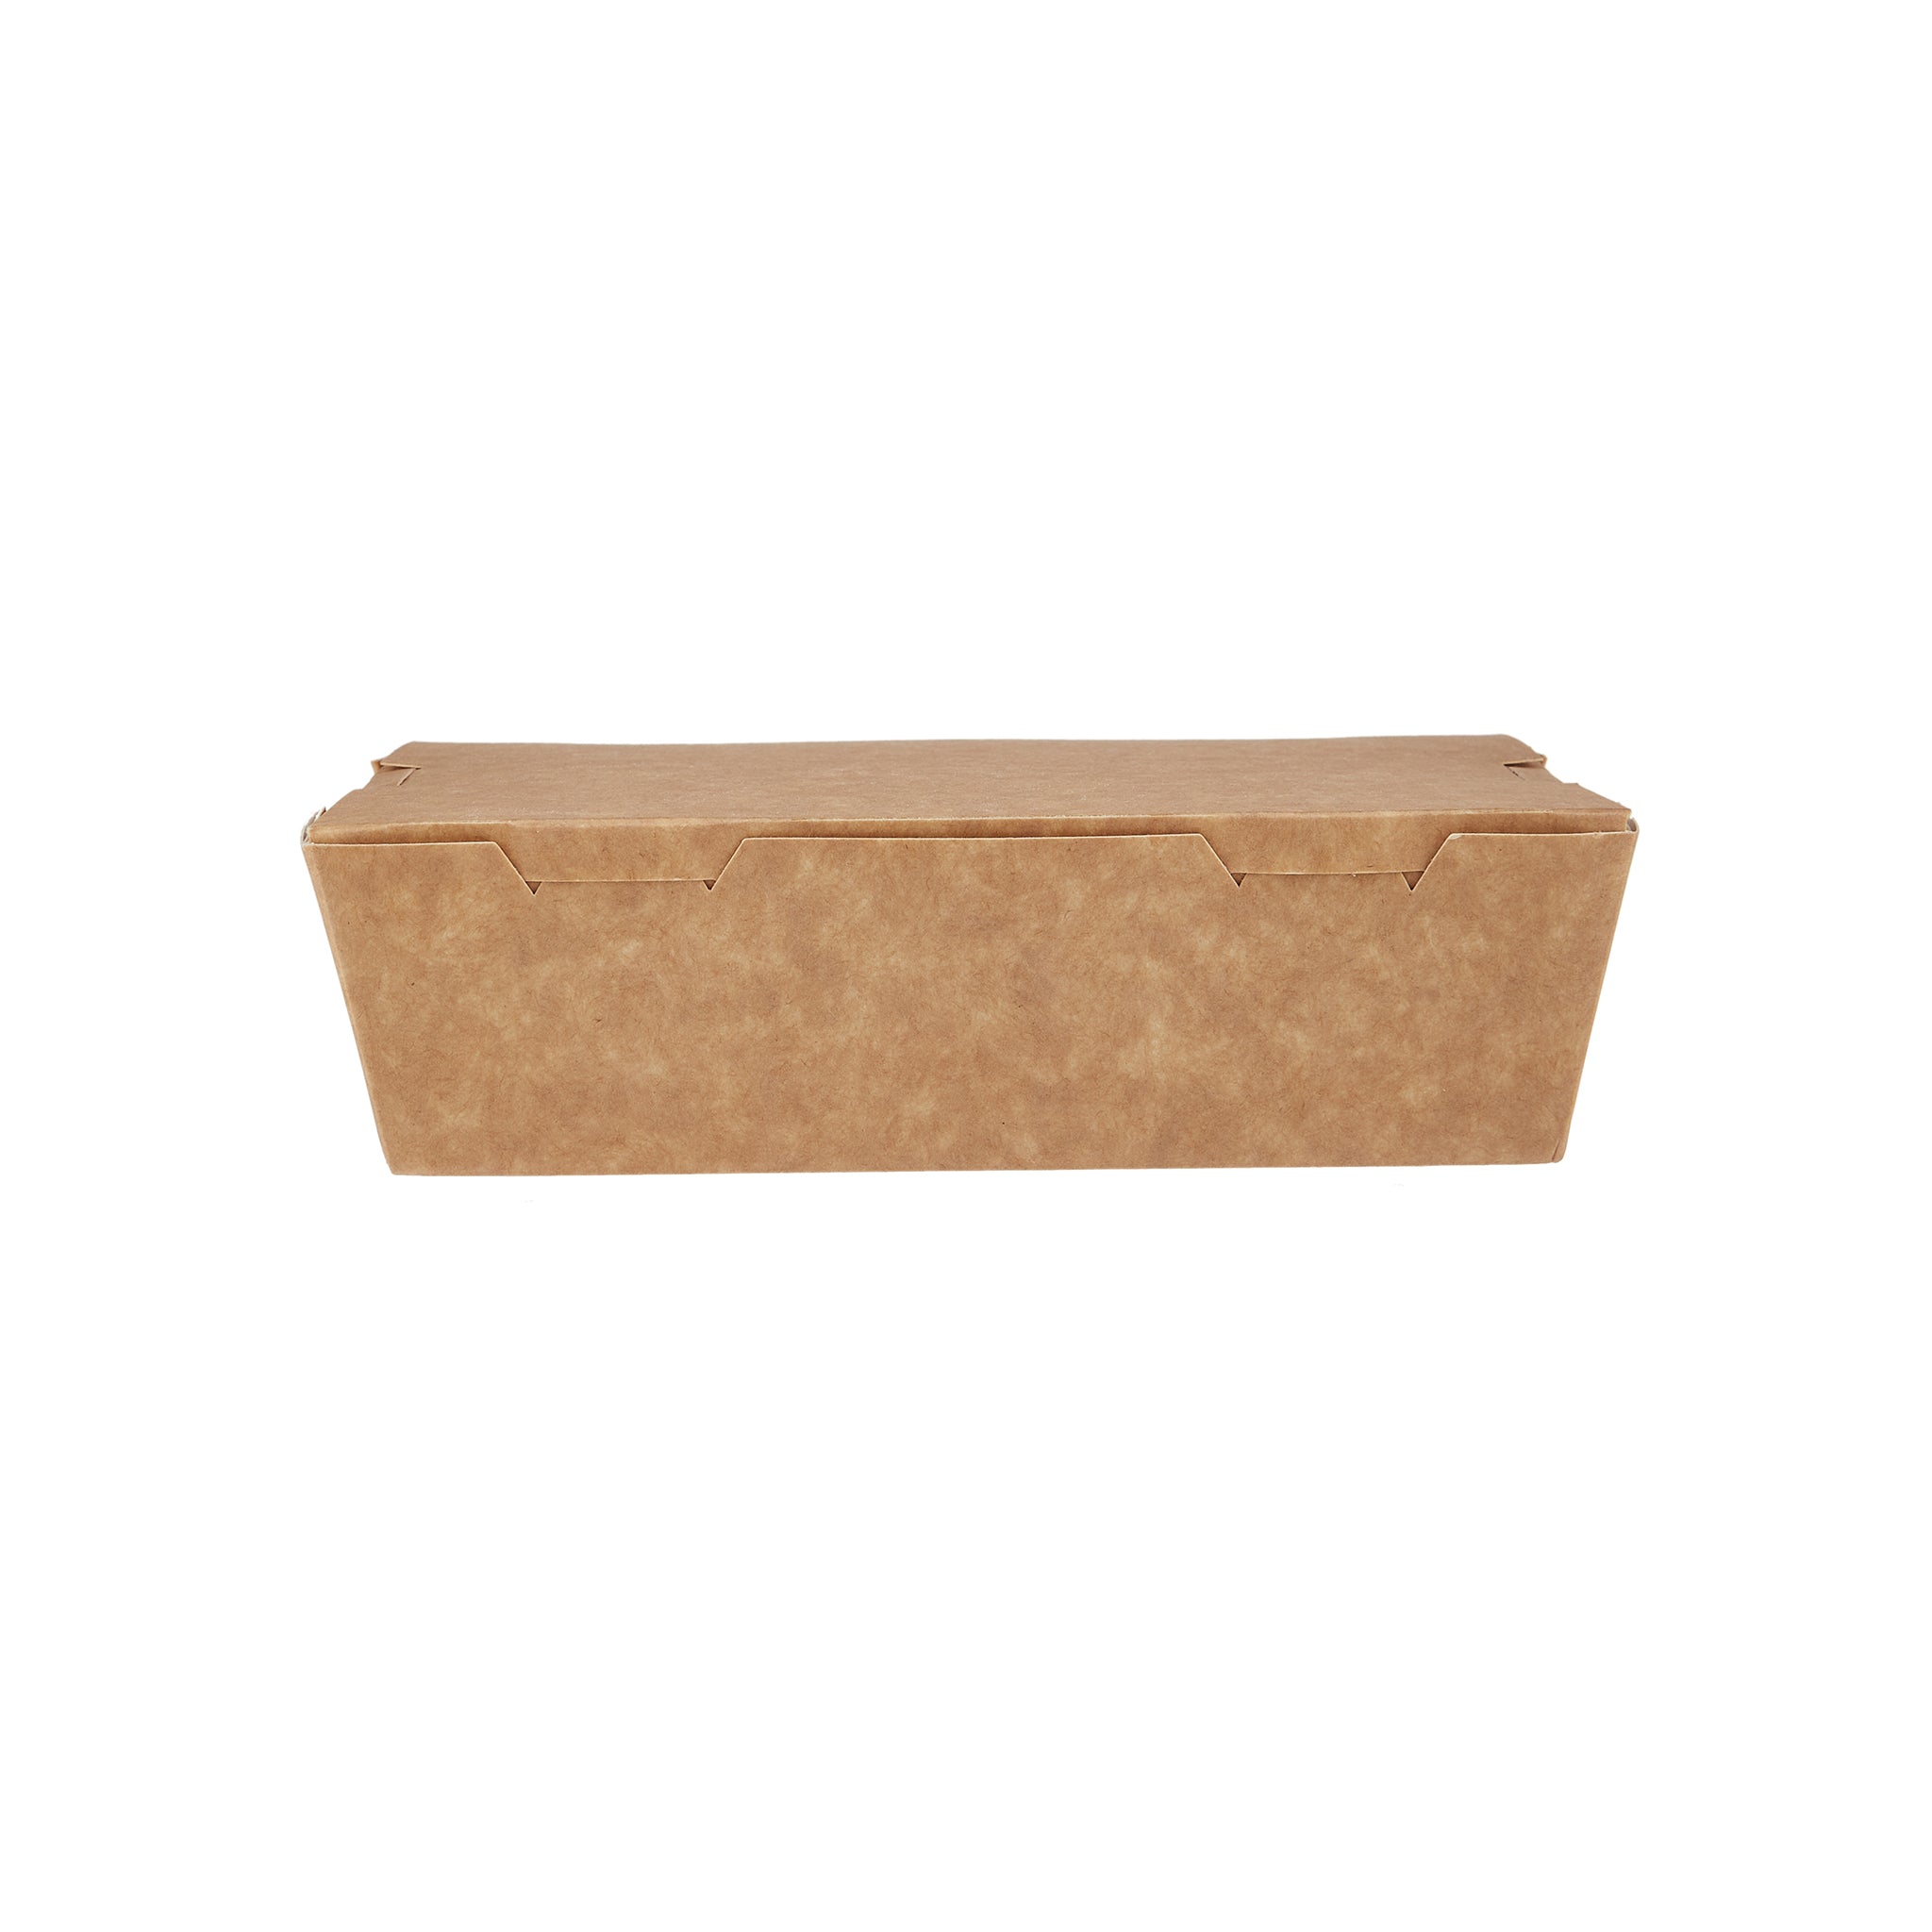 Brown Top Lunch Box - Hotpack Global